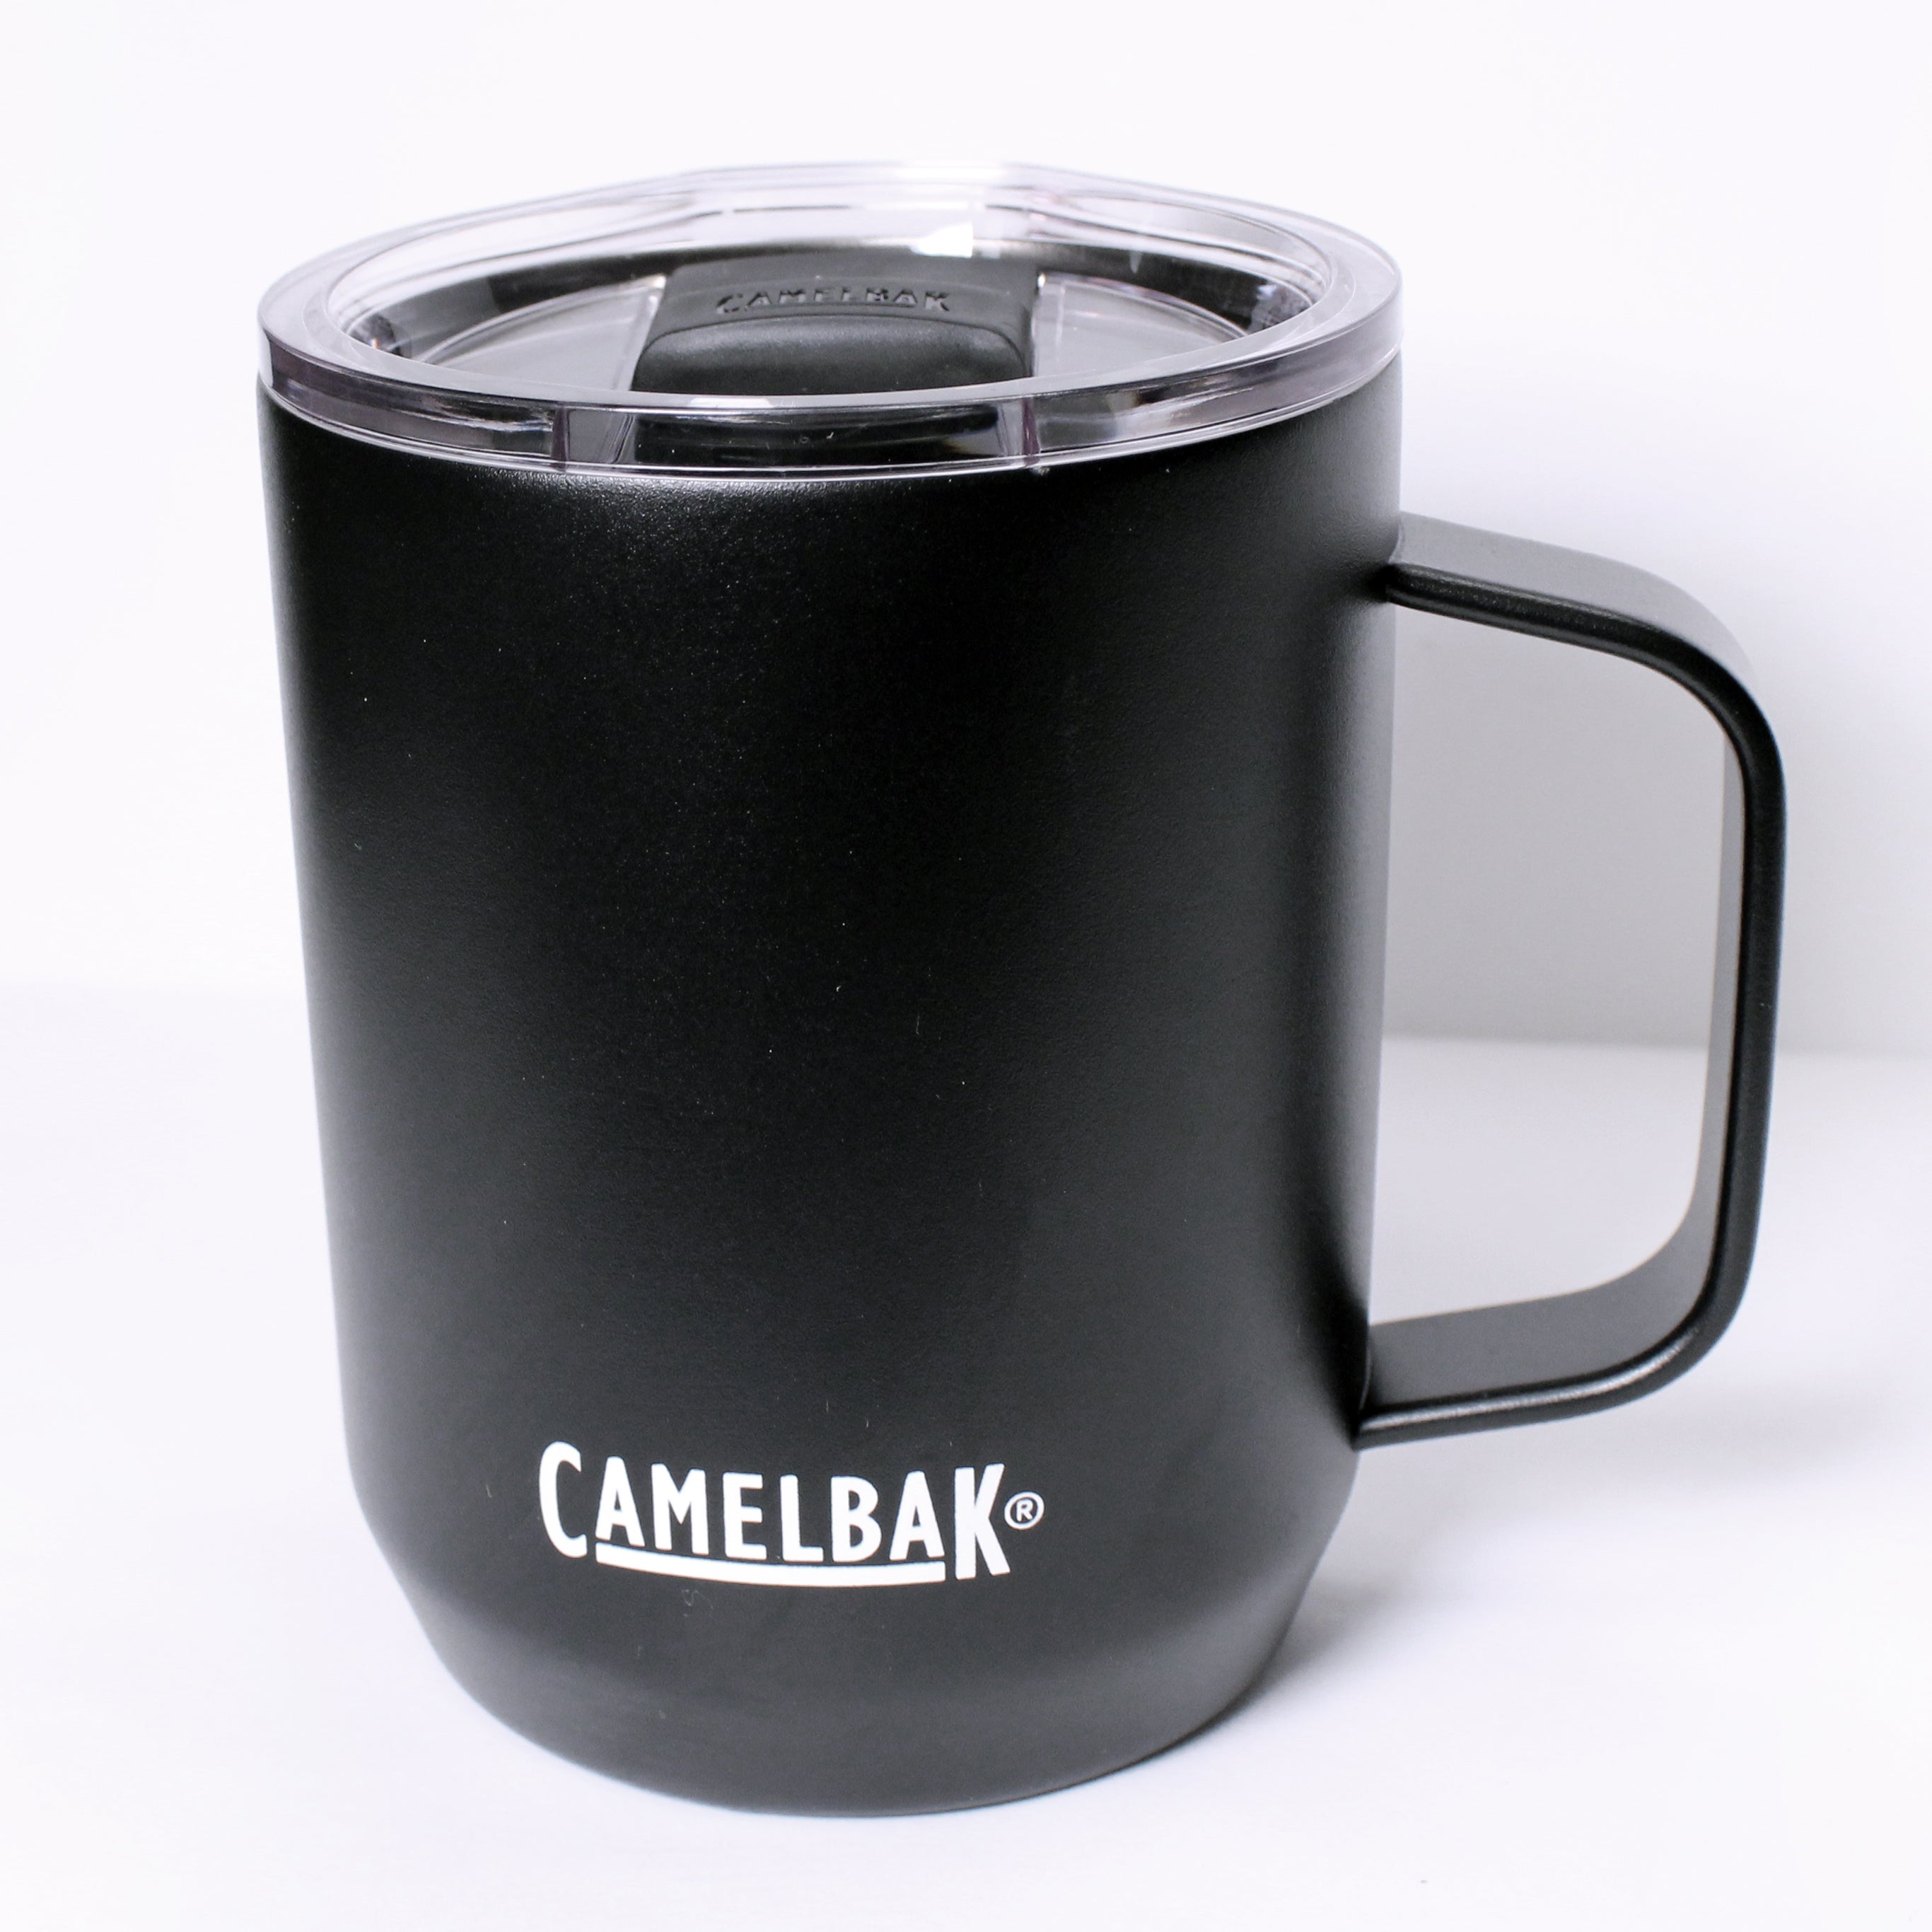 NS Camelbak 12oz Stainless Steel Camp Mug